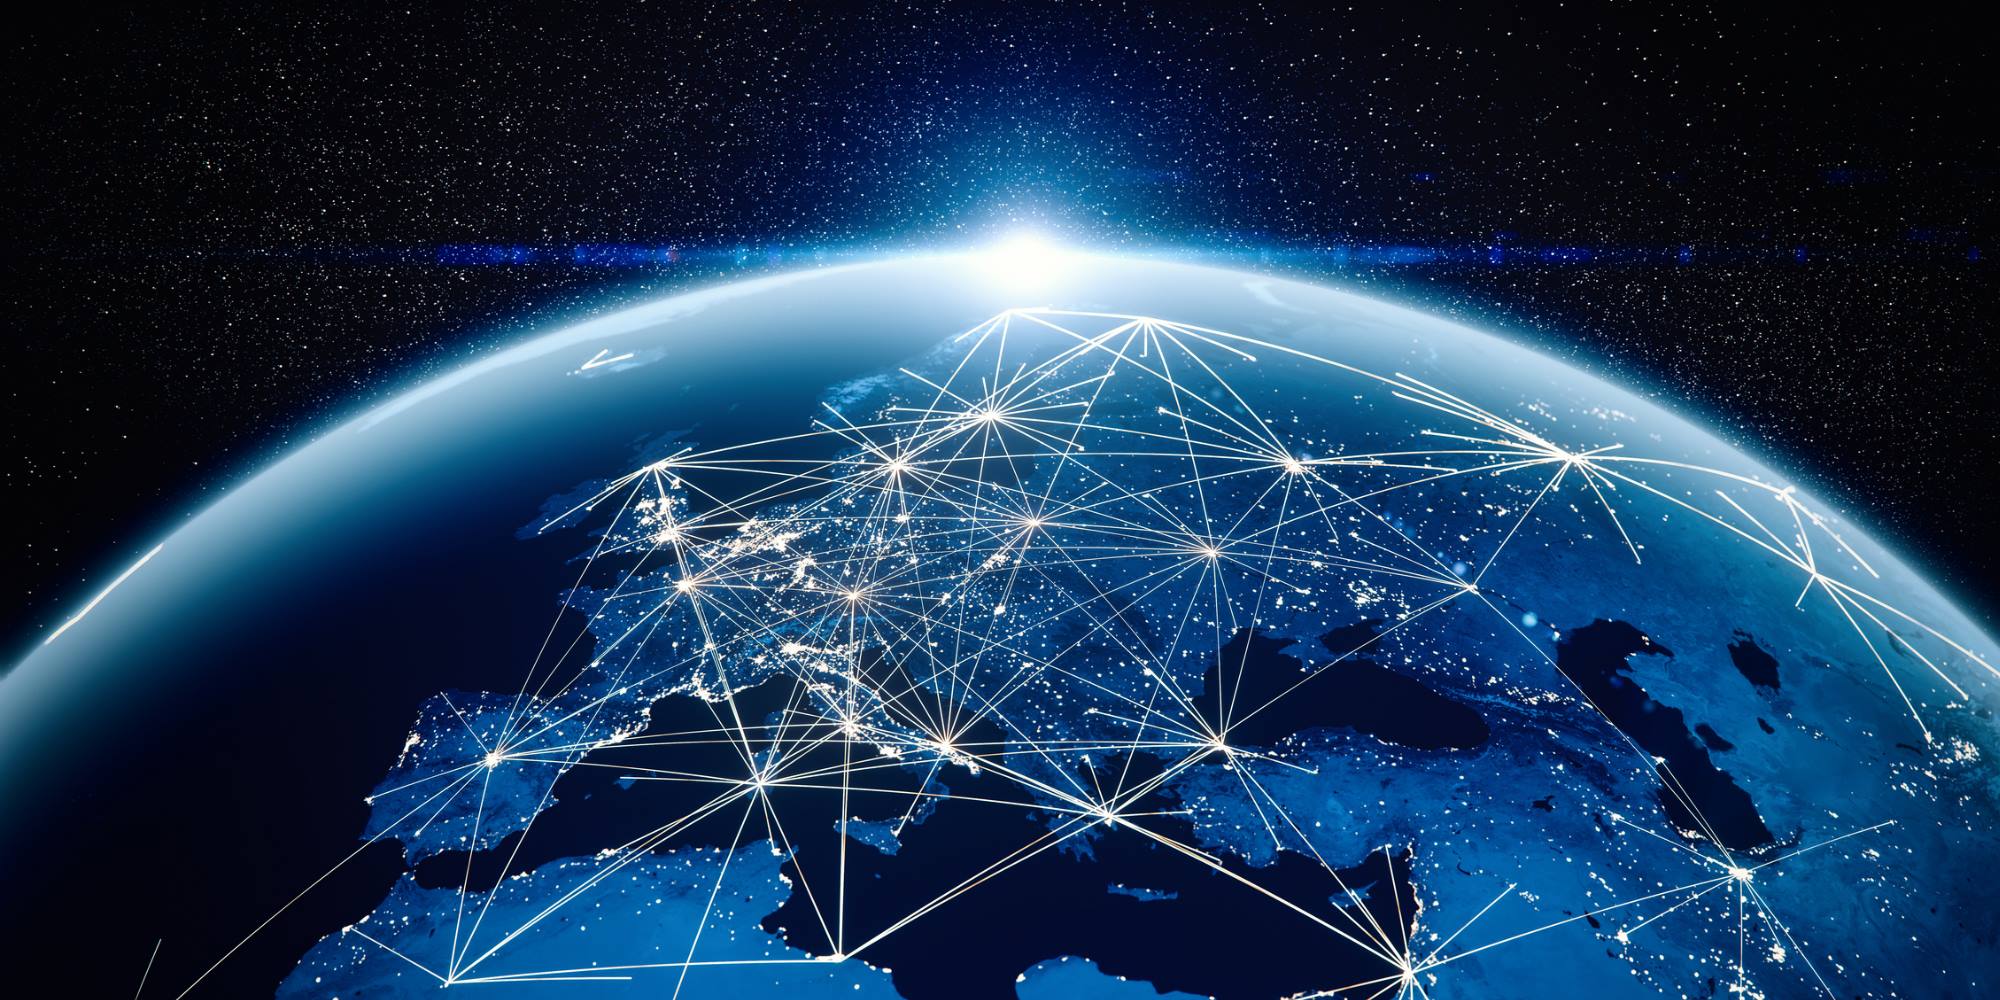 A fintech network spanning the globe